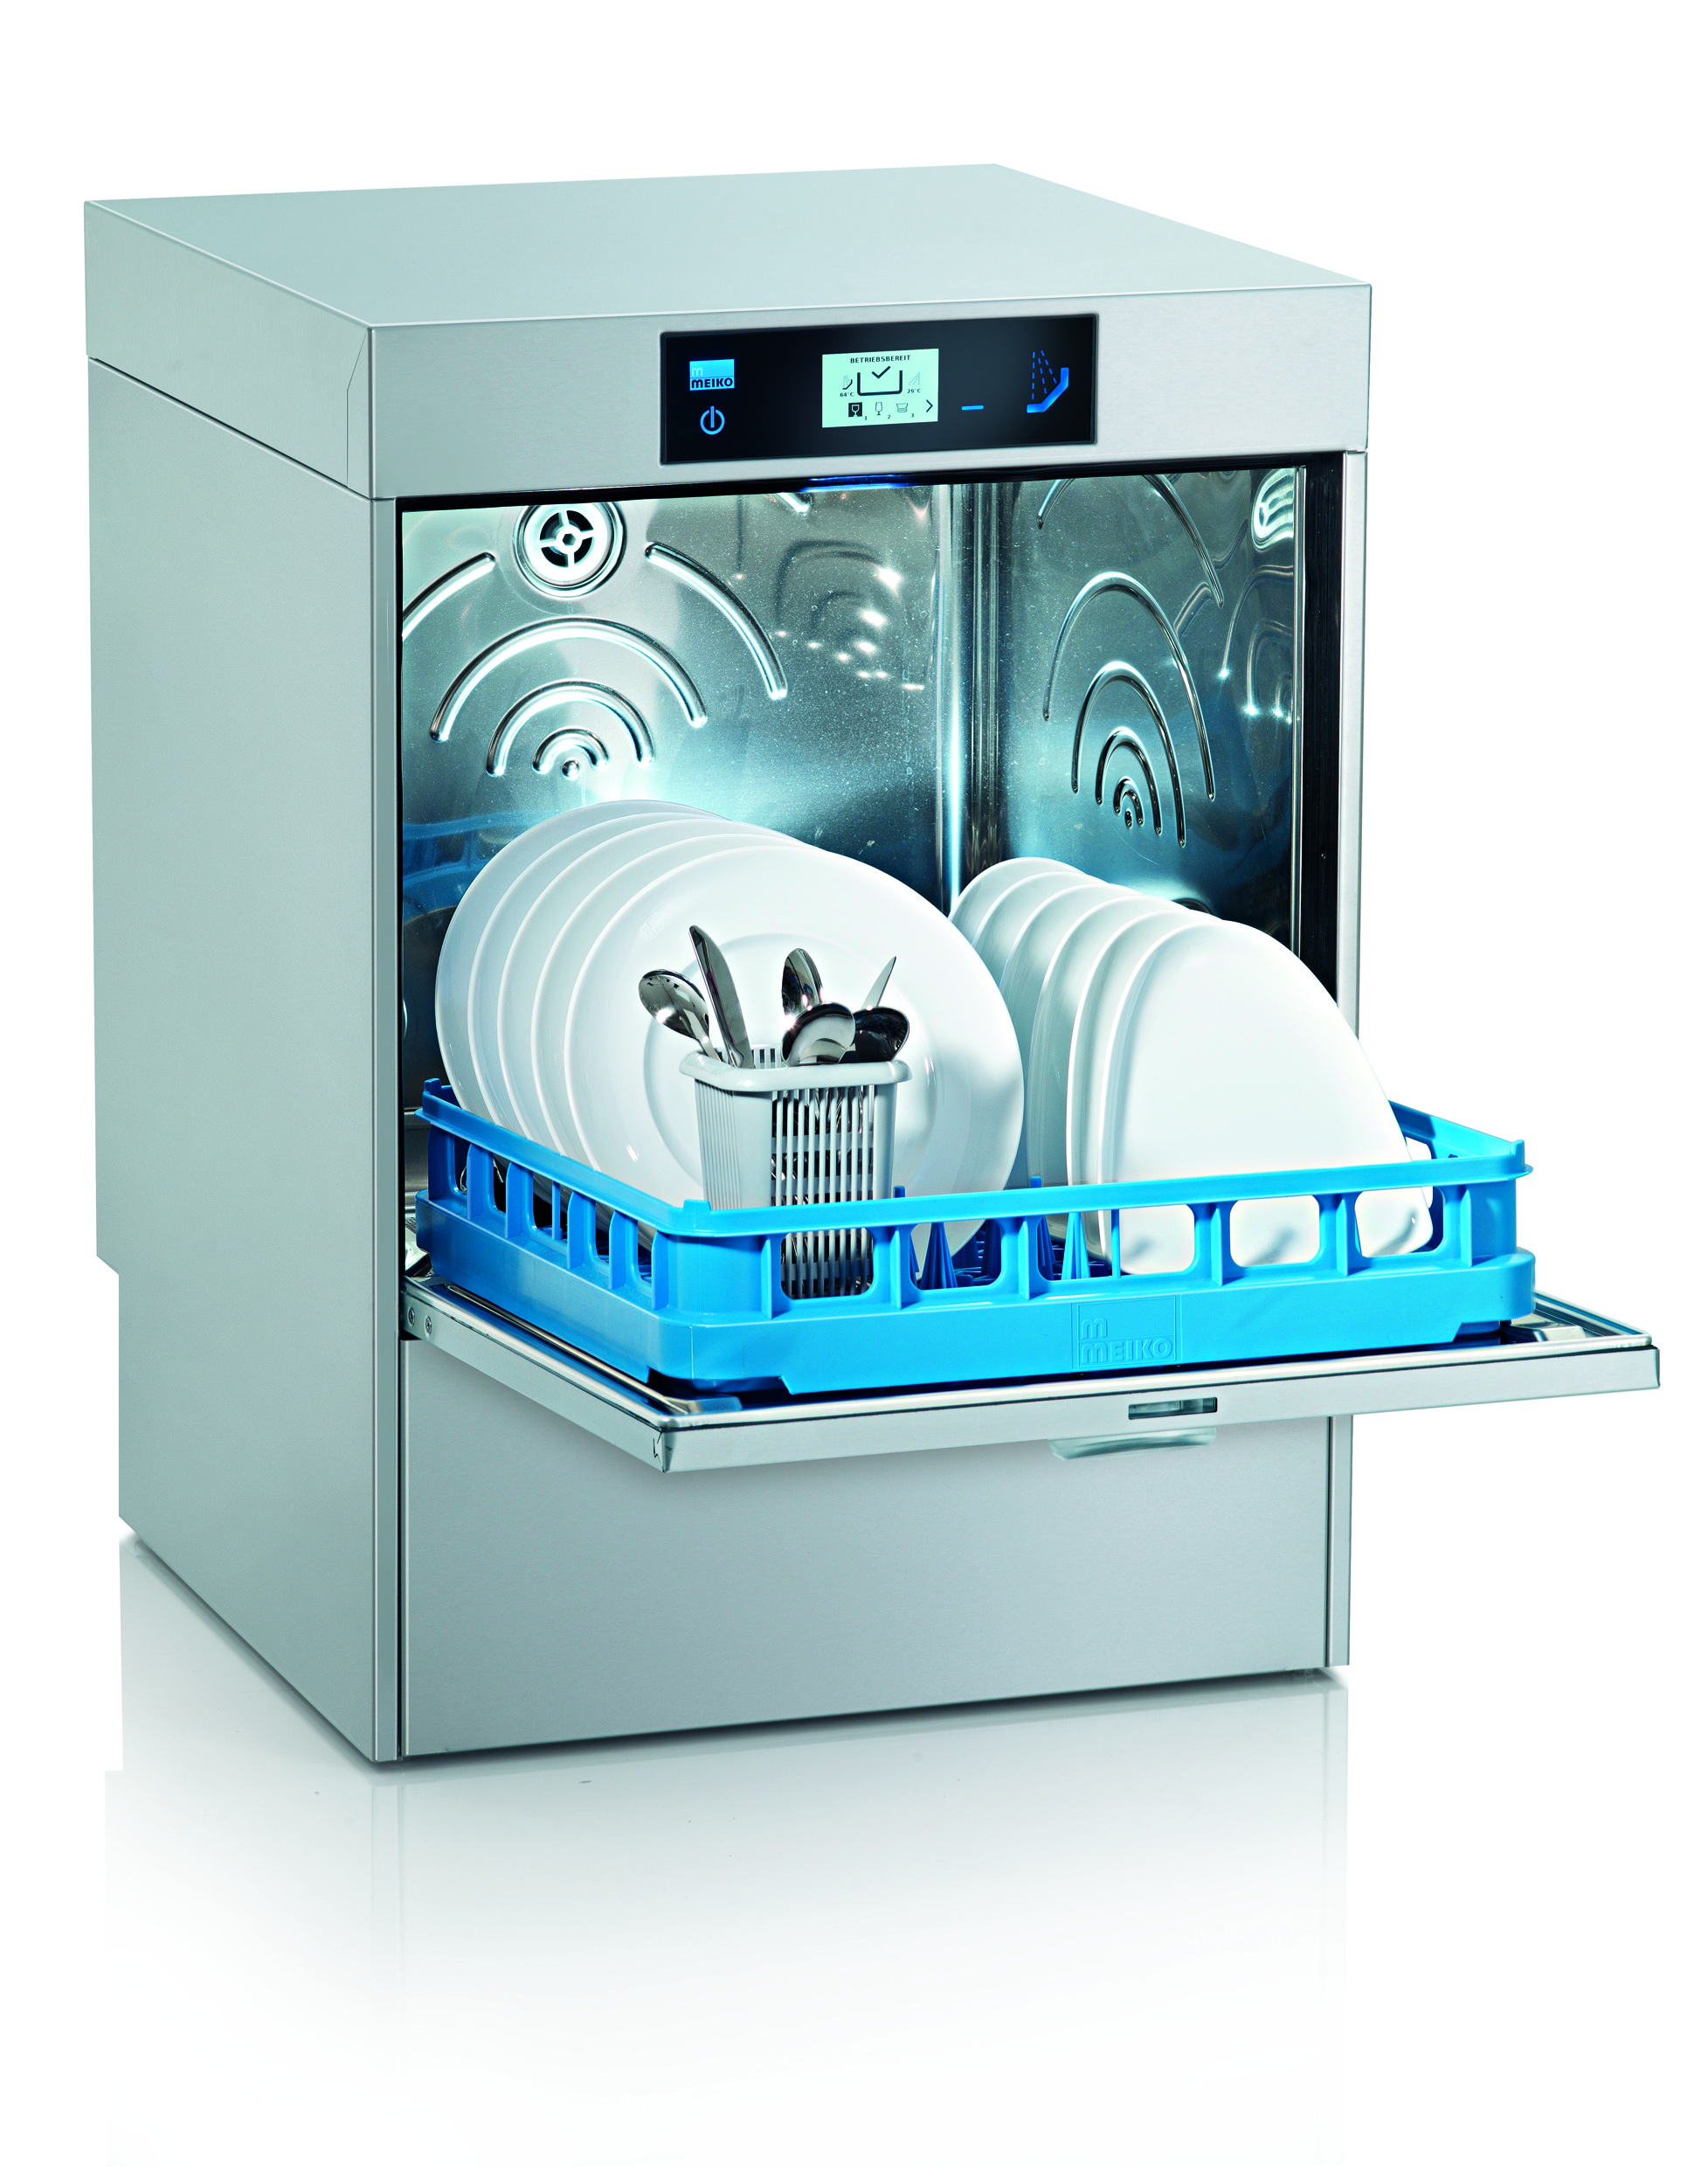 Моющую машинку посудомоечную. Машина посудомоечная Meiko k200kvp. Машина посудомоечная Mach MS/9451. Стаканомоечная машина FV 40.2 Meiko. M Meikof посудомойка Meiko.